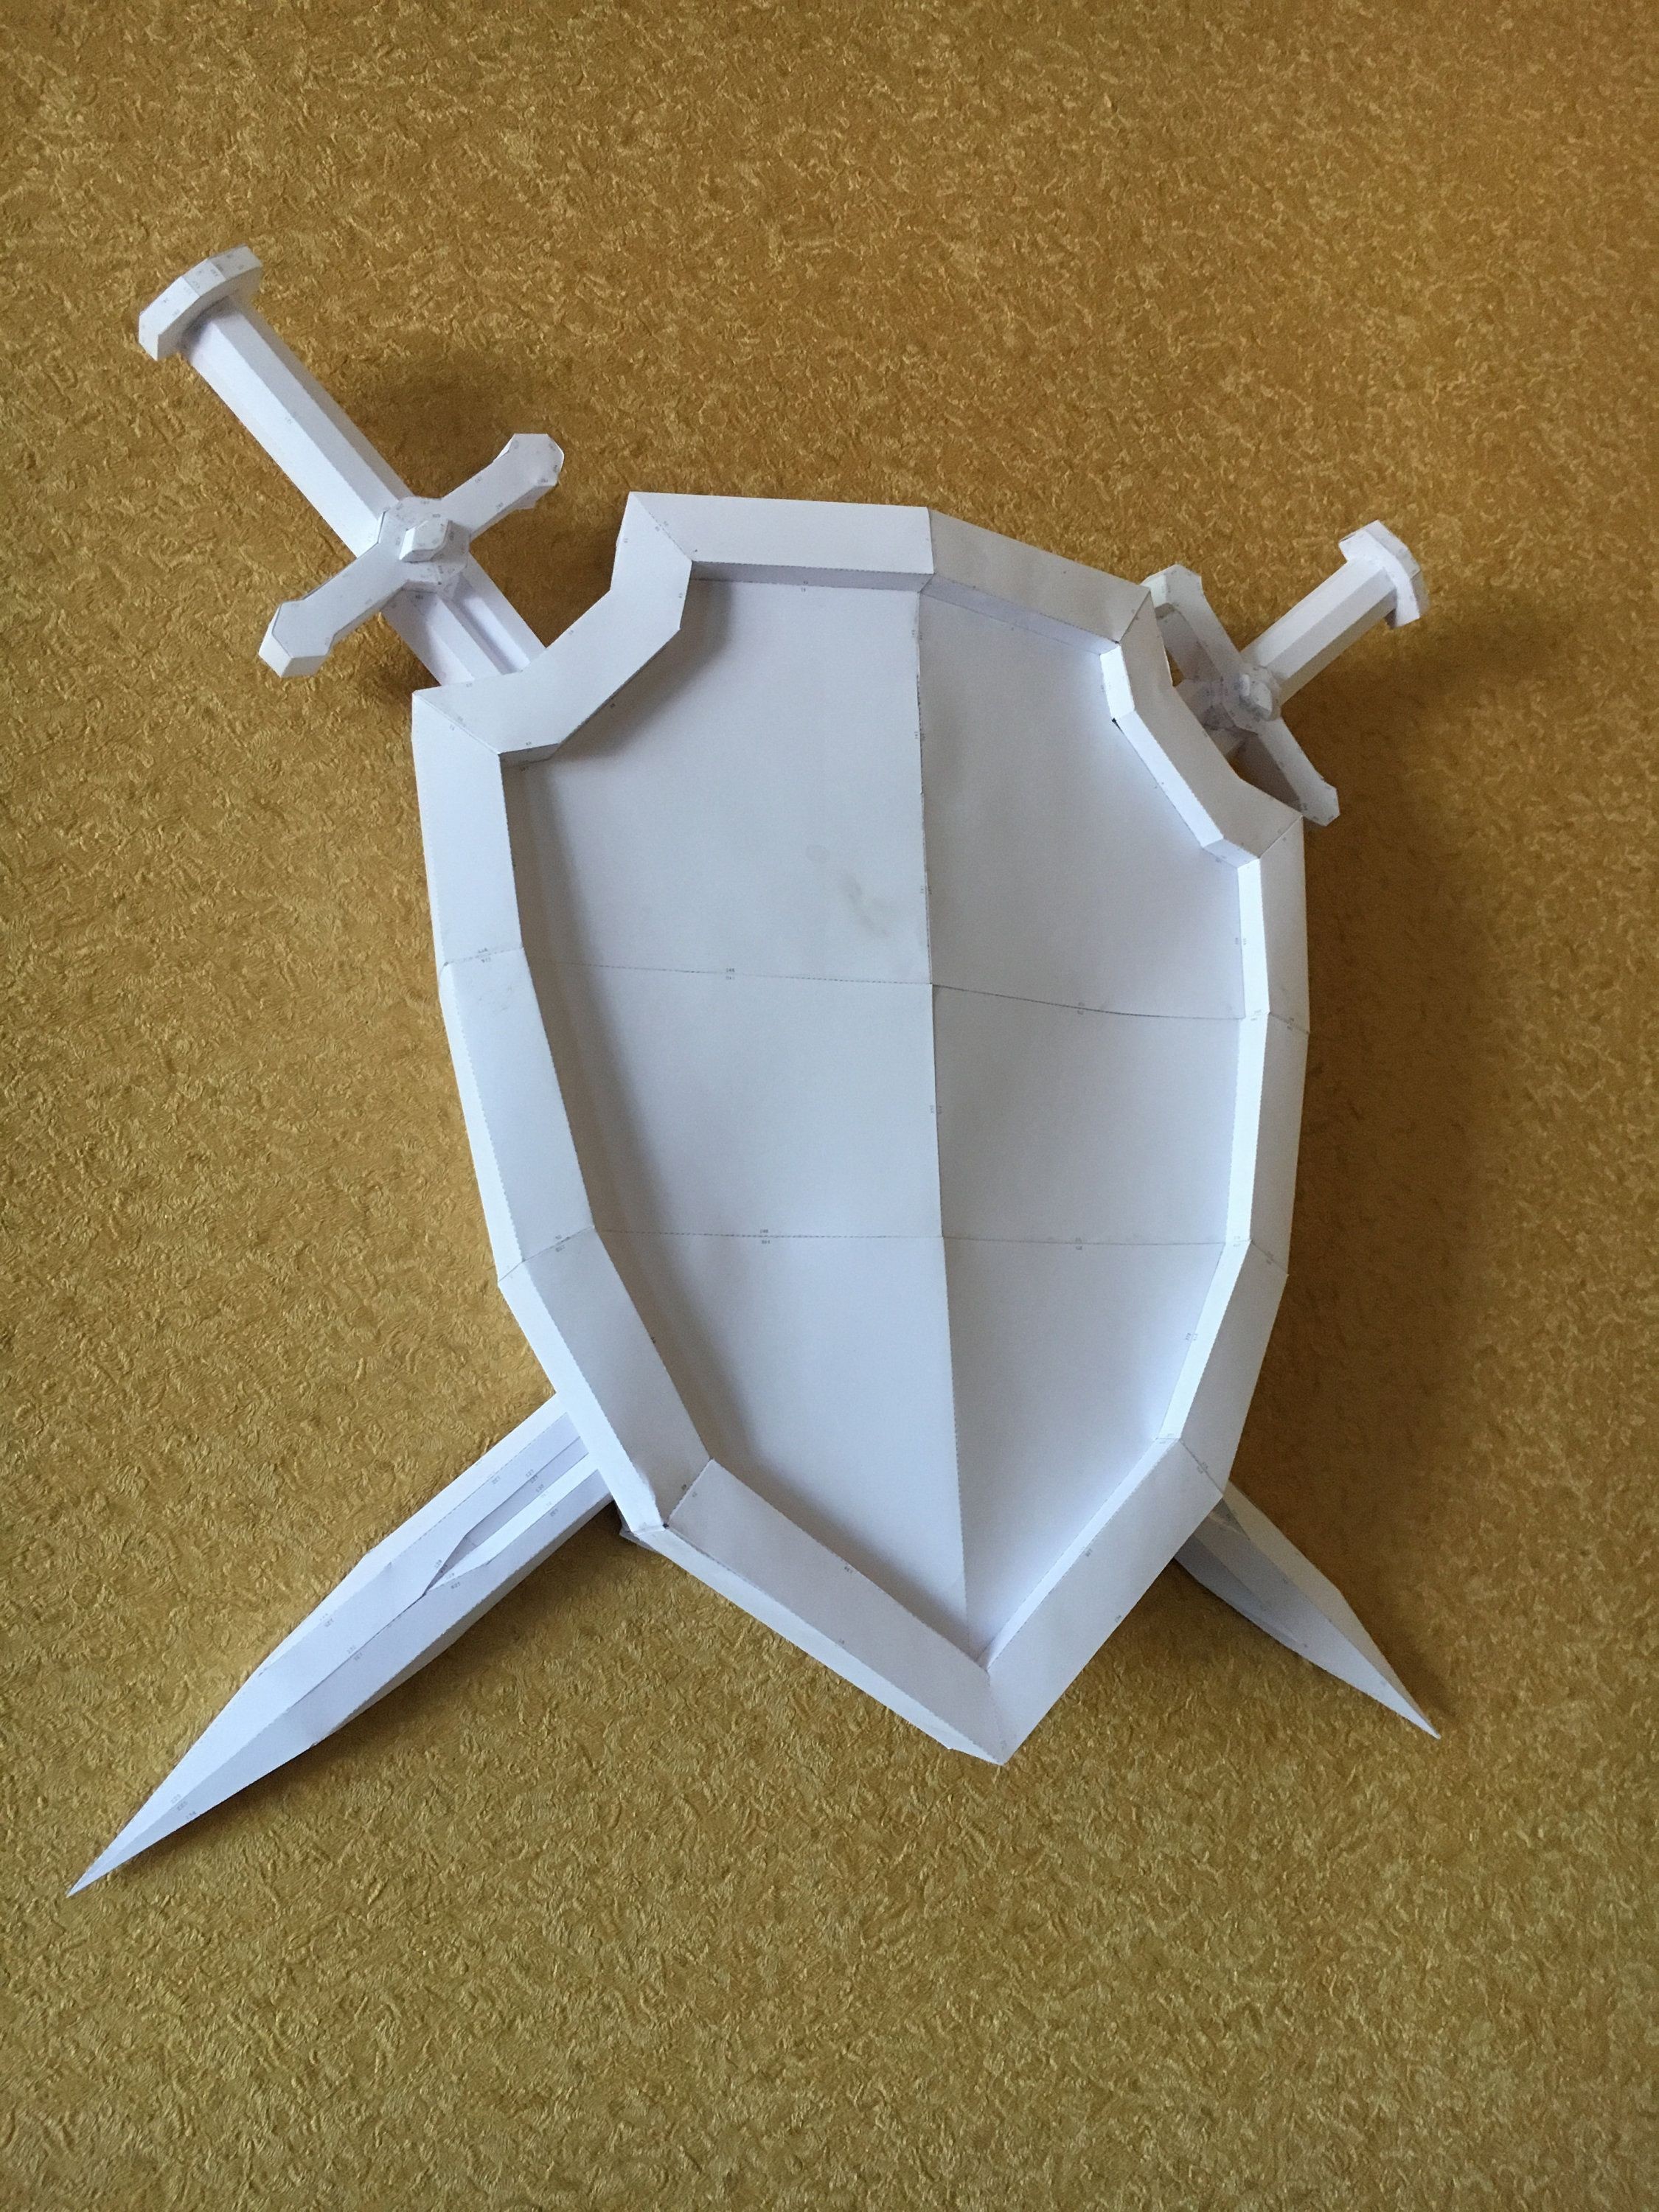 Papercraft Guns Sword Shield Diy Papercraft Model ÐÑÐ¼Ð°Ð¶Ð½ÑÐµ Ð¸Ð·Ð´ÐµÐ Ð¸Ñ